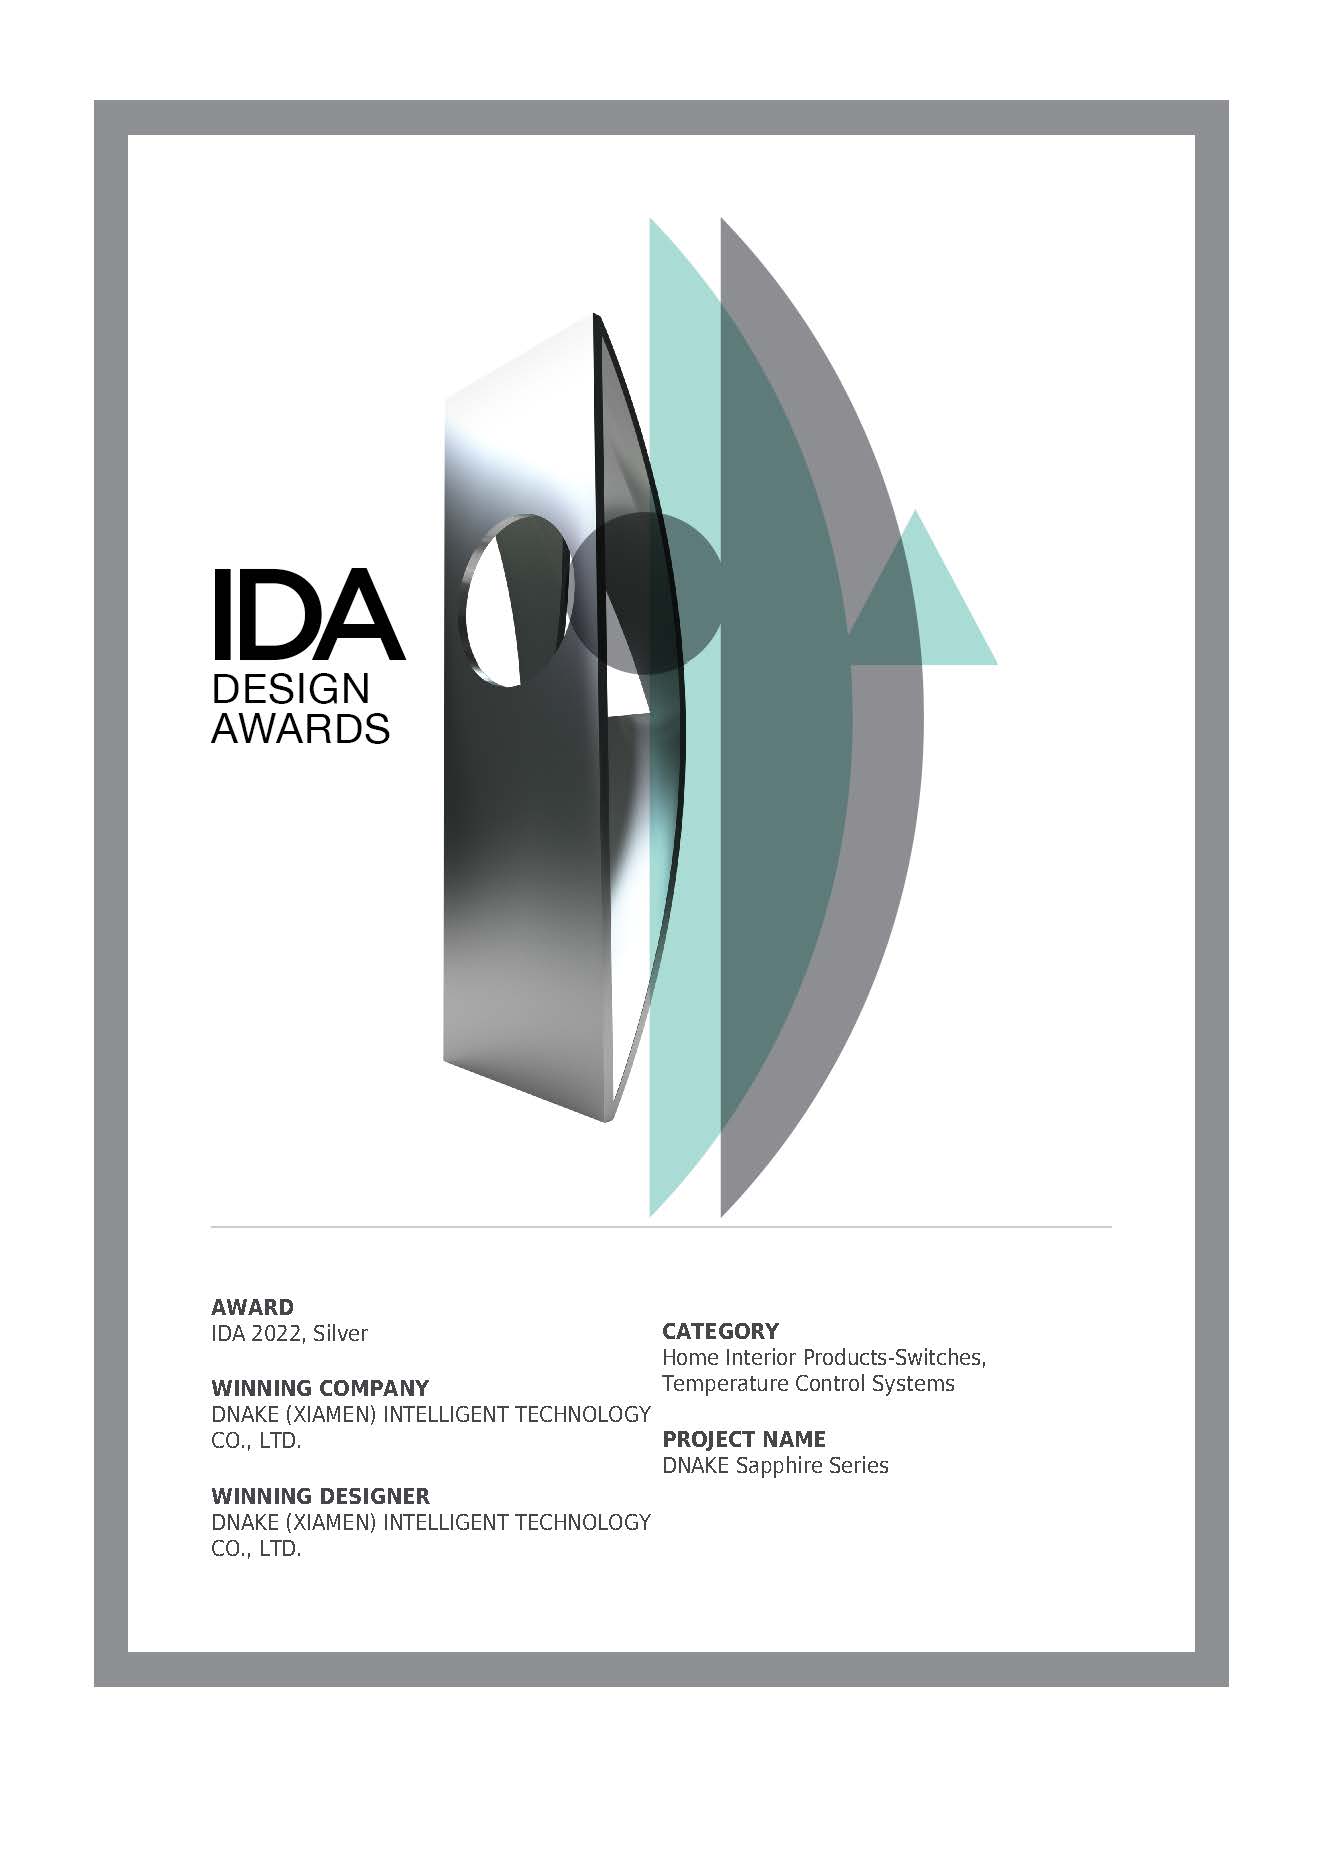 I-IDA Design Awards